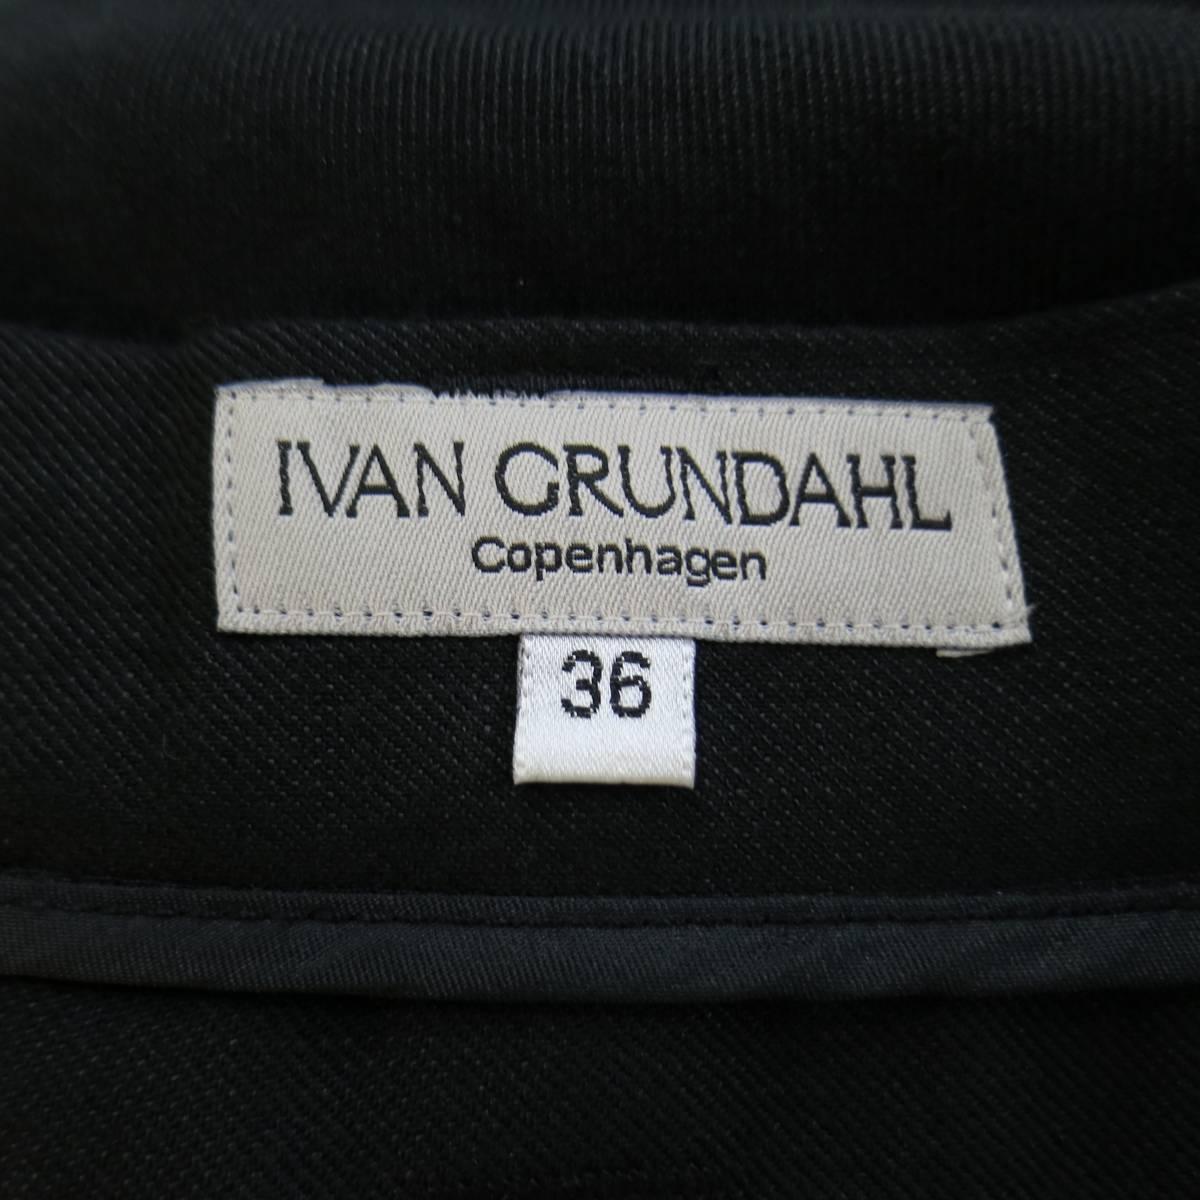 IVAN GRUNDAHL Size 6 Charcoal Wool Draped Origami Pants 1